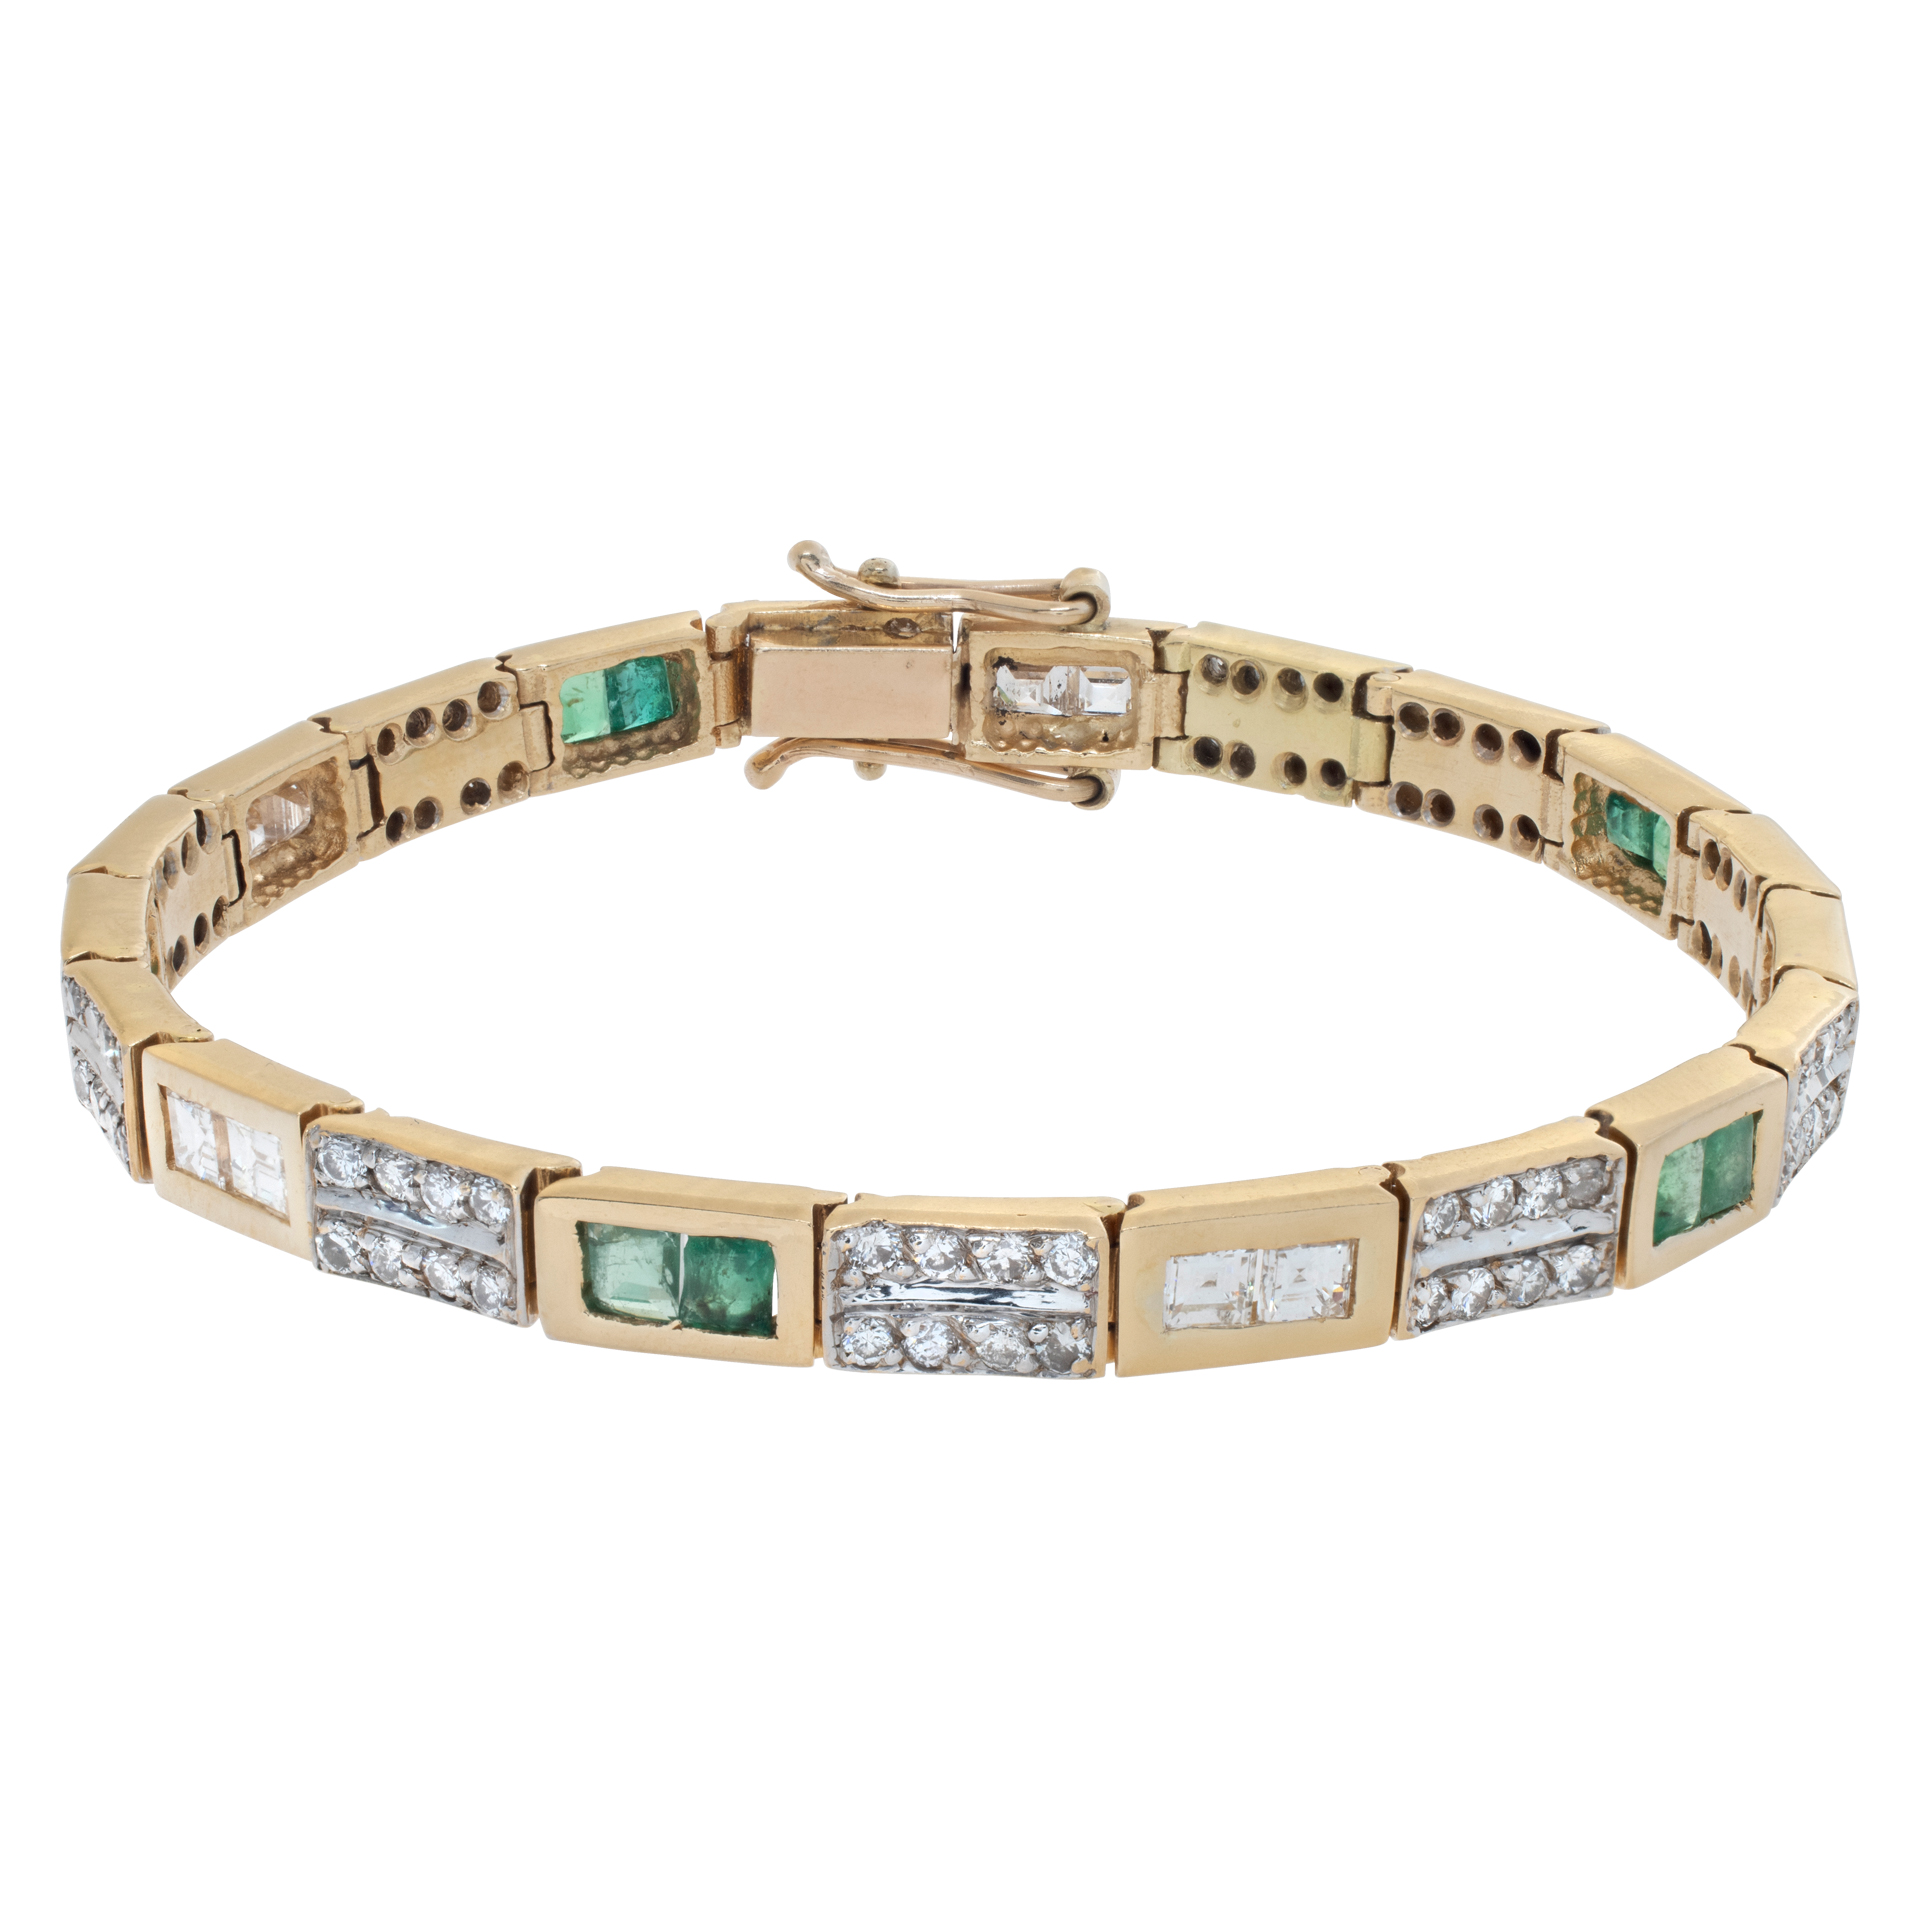 Emerald and diamonds bracelet in 14k white gold